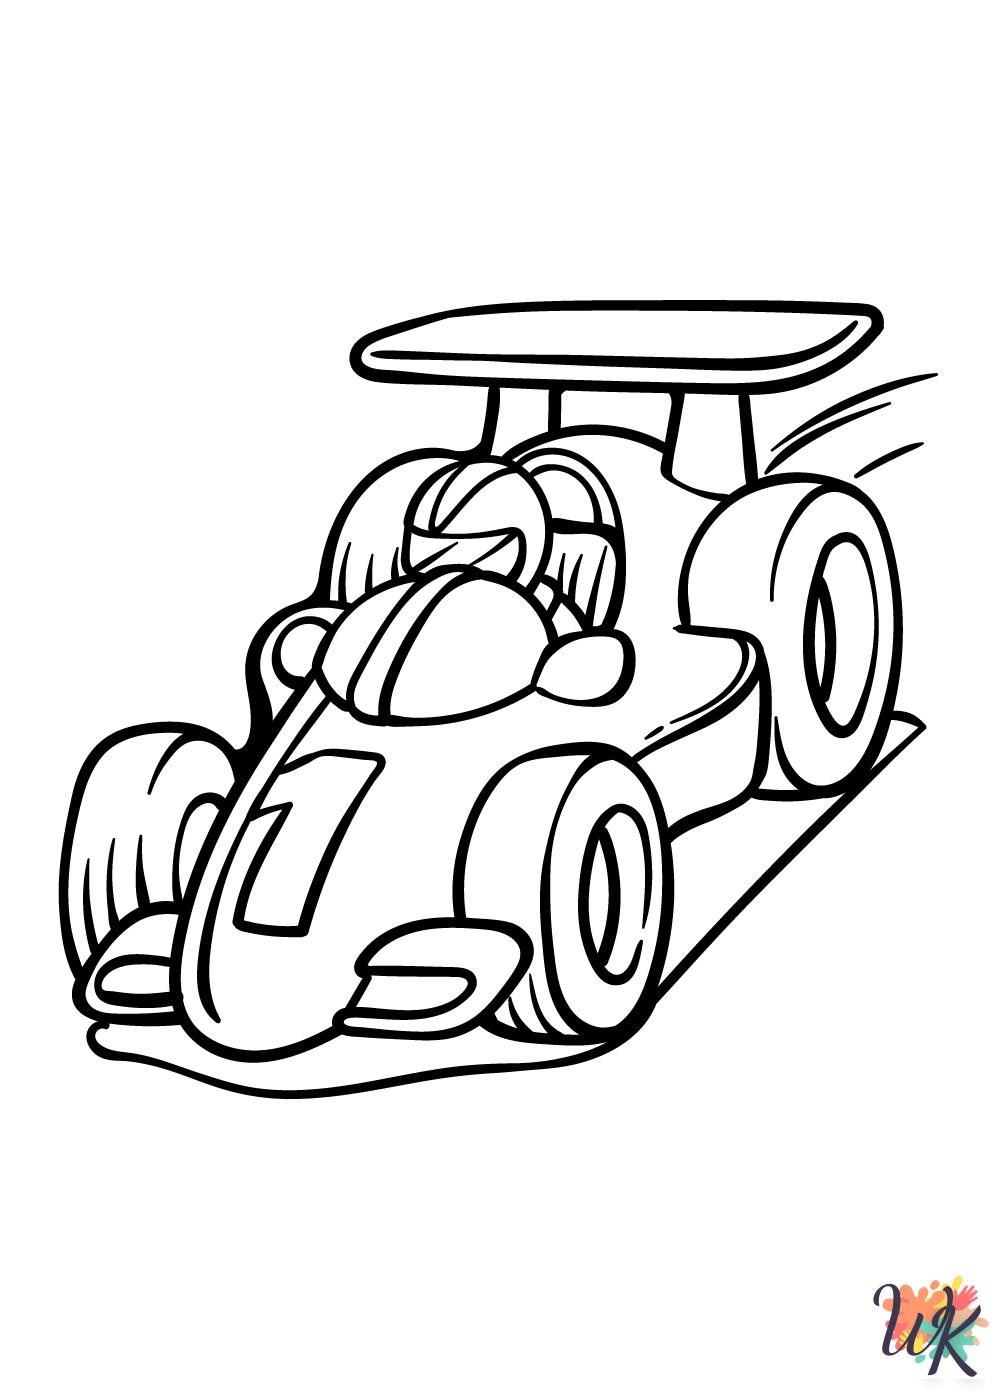 Race Car Coloring Pages 37